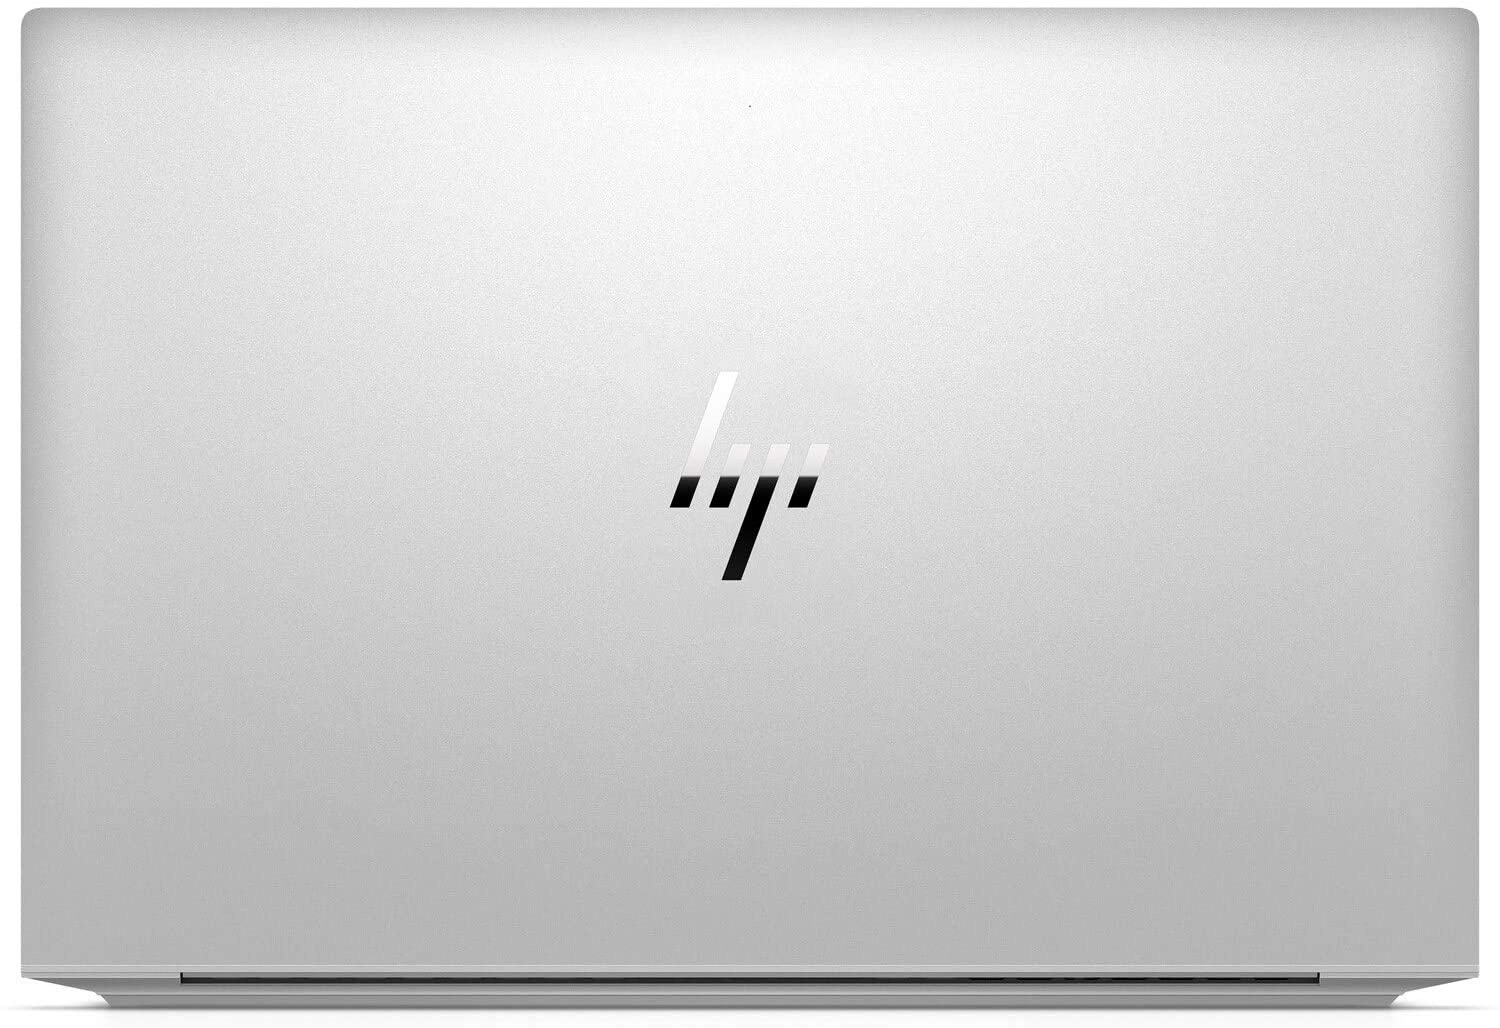 HP 176Z0EA laptop image